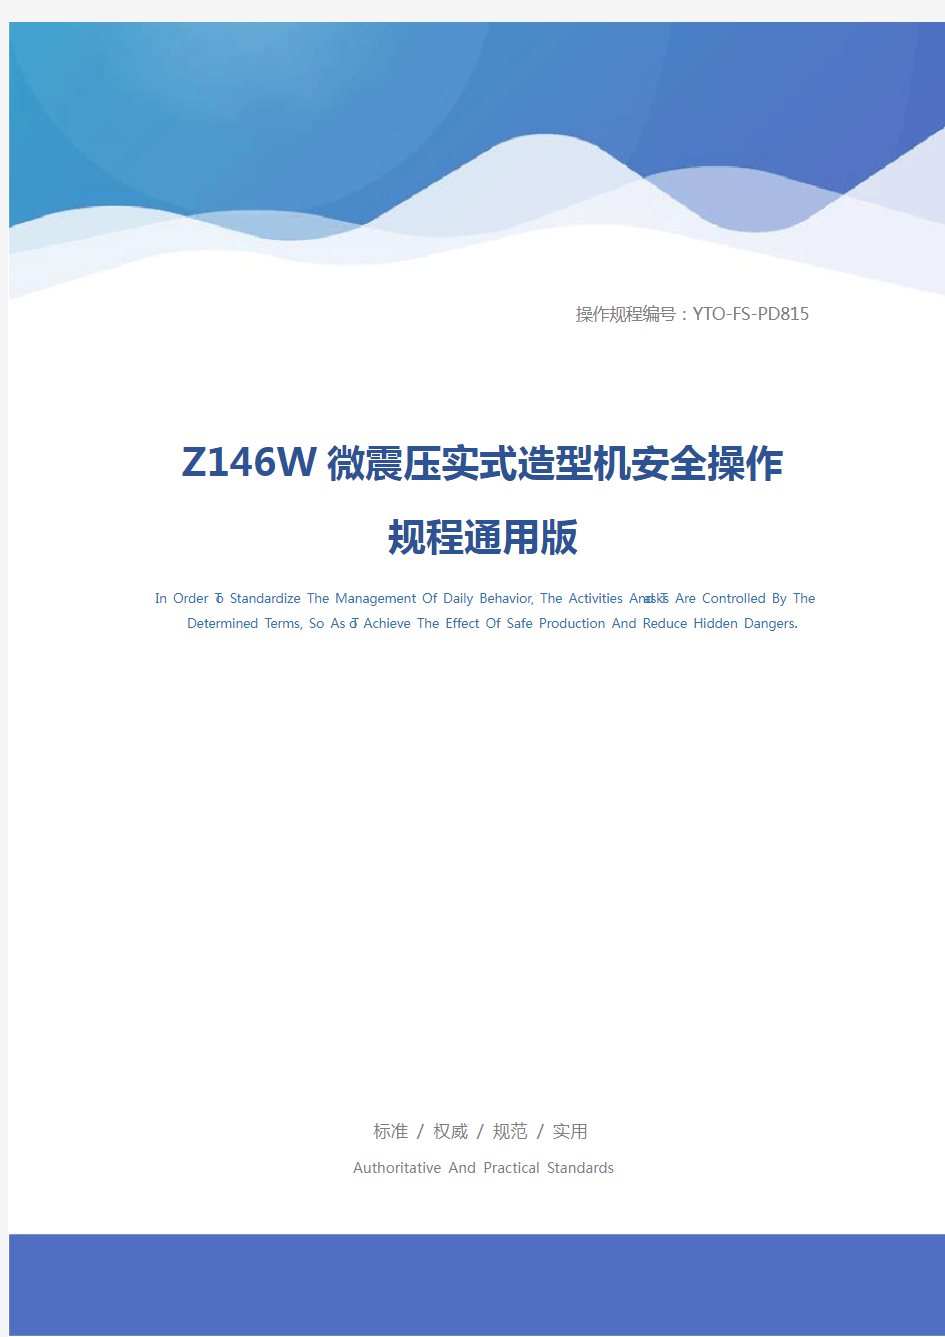 Z146W微震压实式造型机安全操作规程通用版